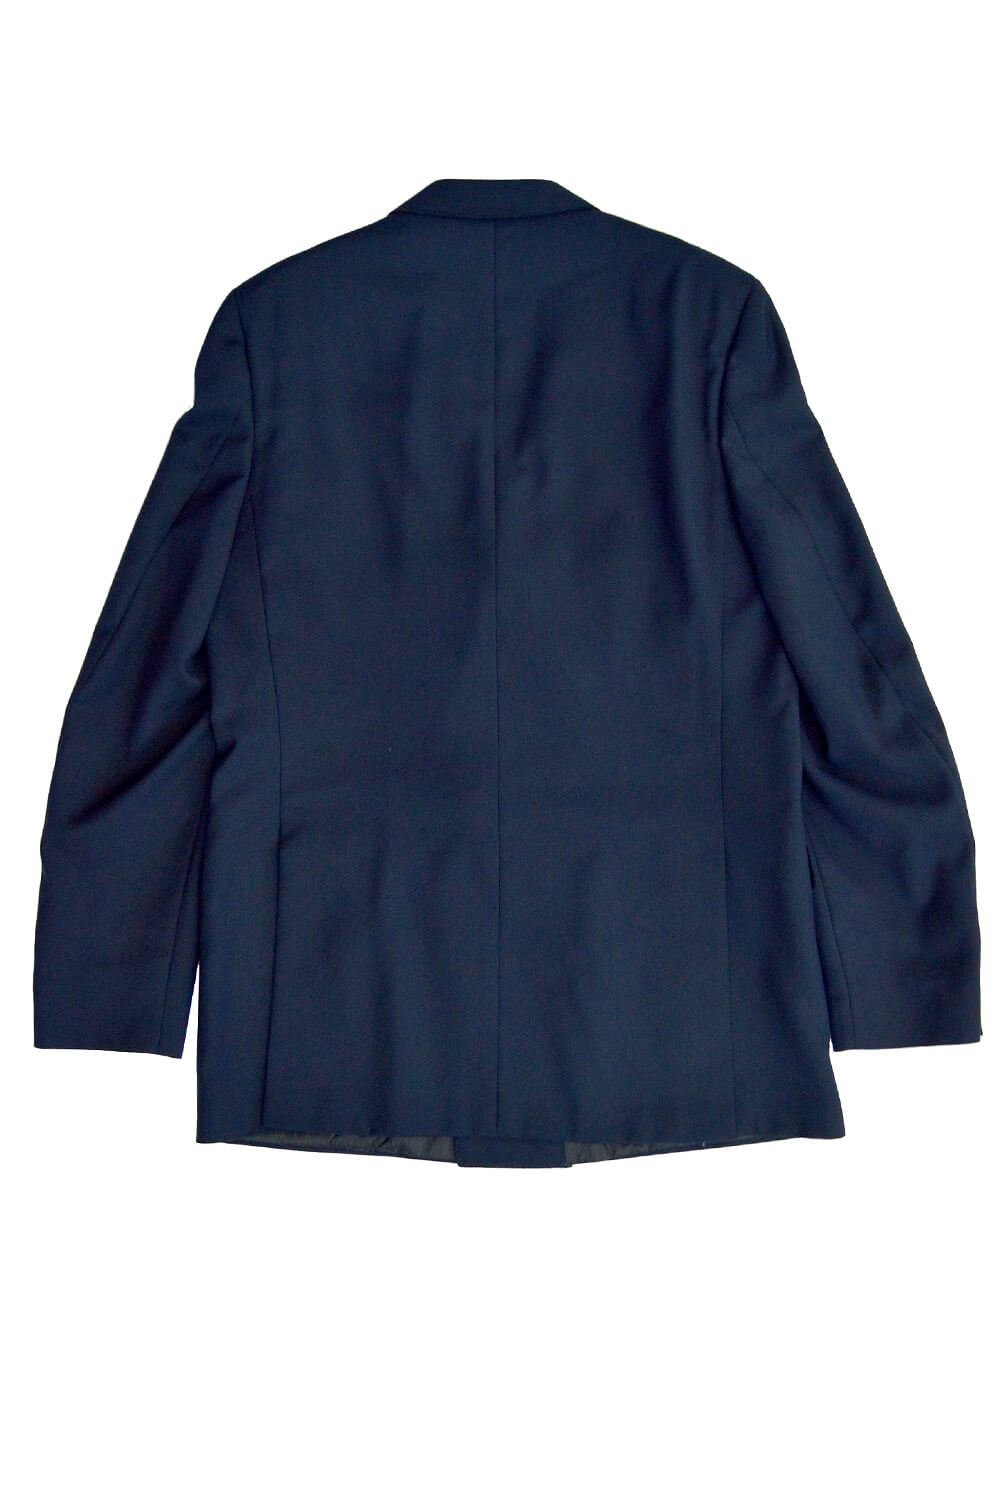 vintage double breasted blazer - navy blue - size medium/large